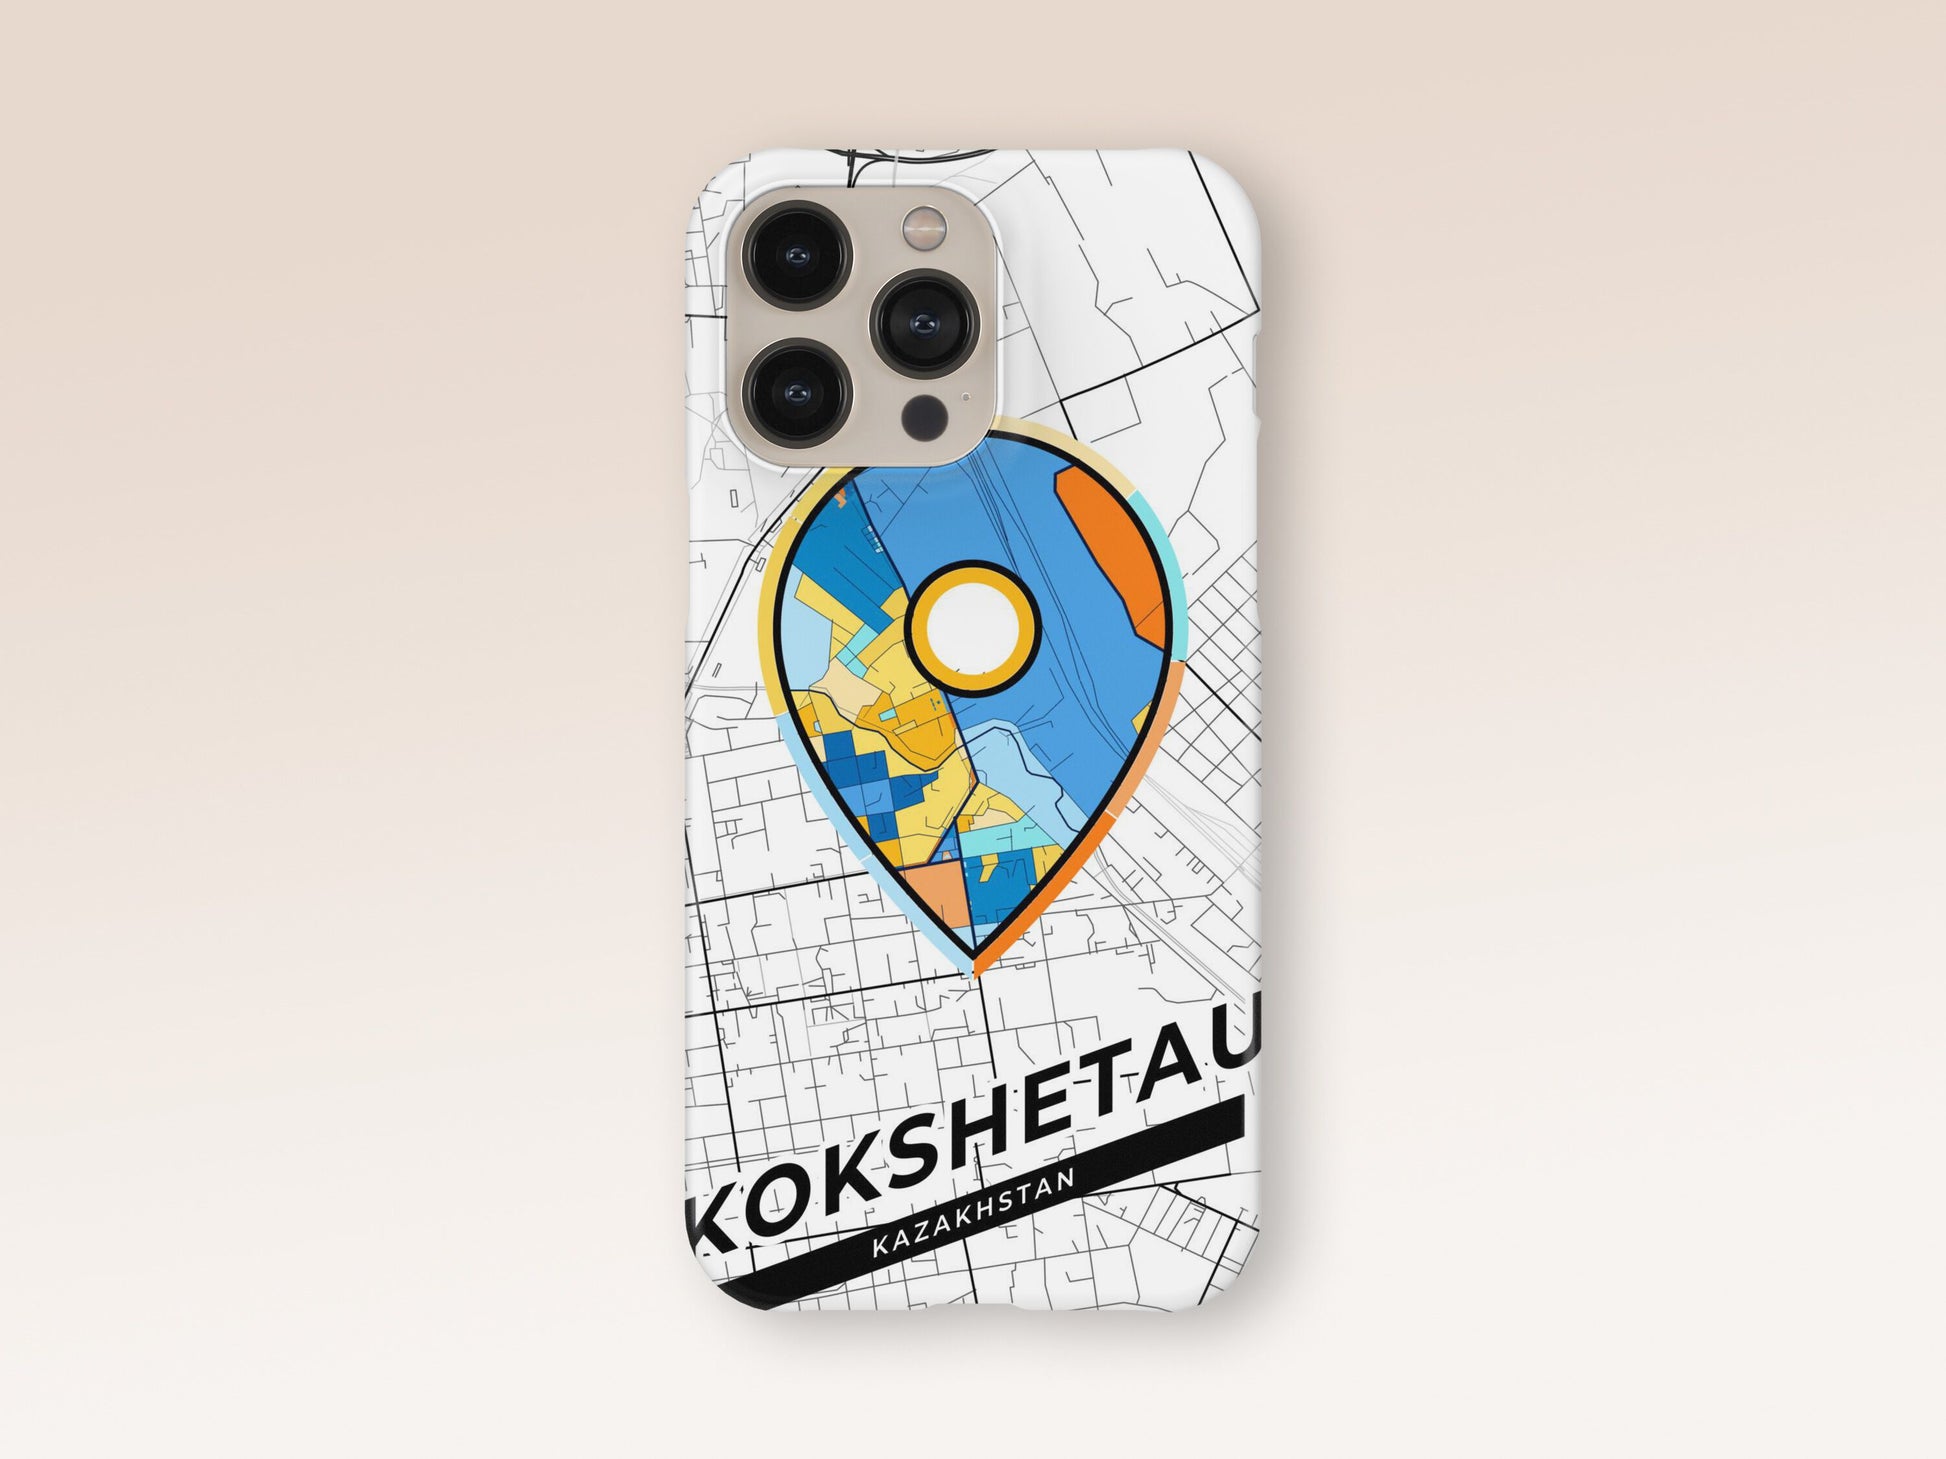 Kokshetau Kazakhstan slim phone case with colorful icon. Birthday, wedding or housewarming gift. Couple match cases. 1